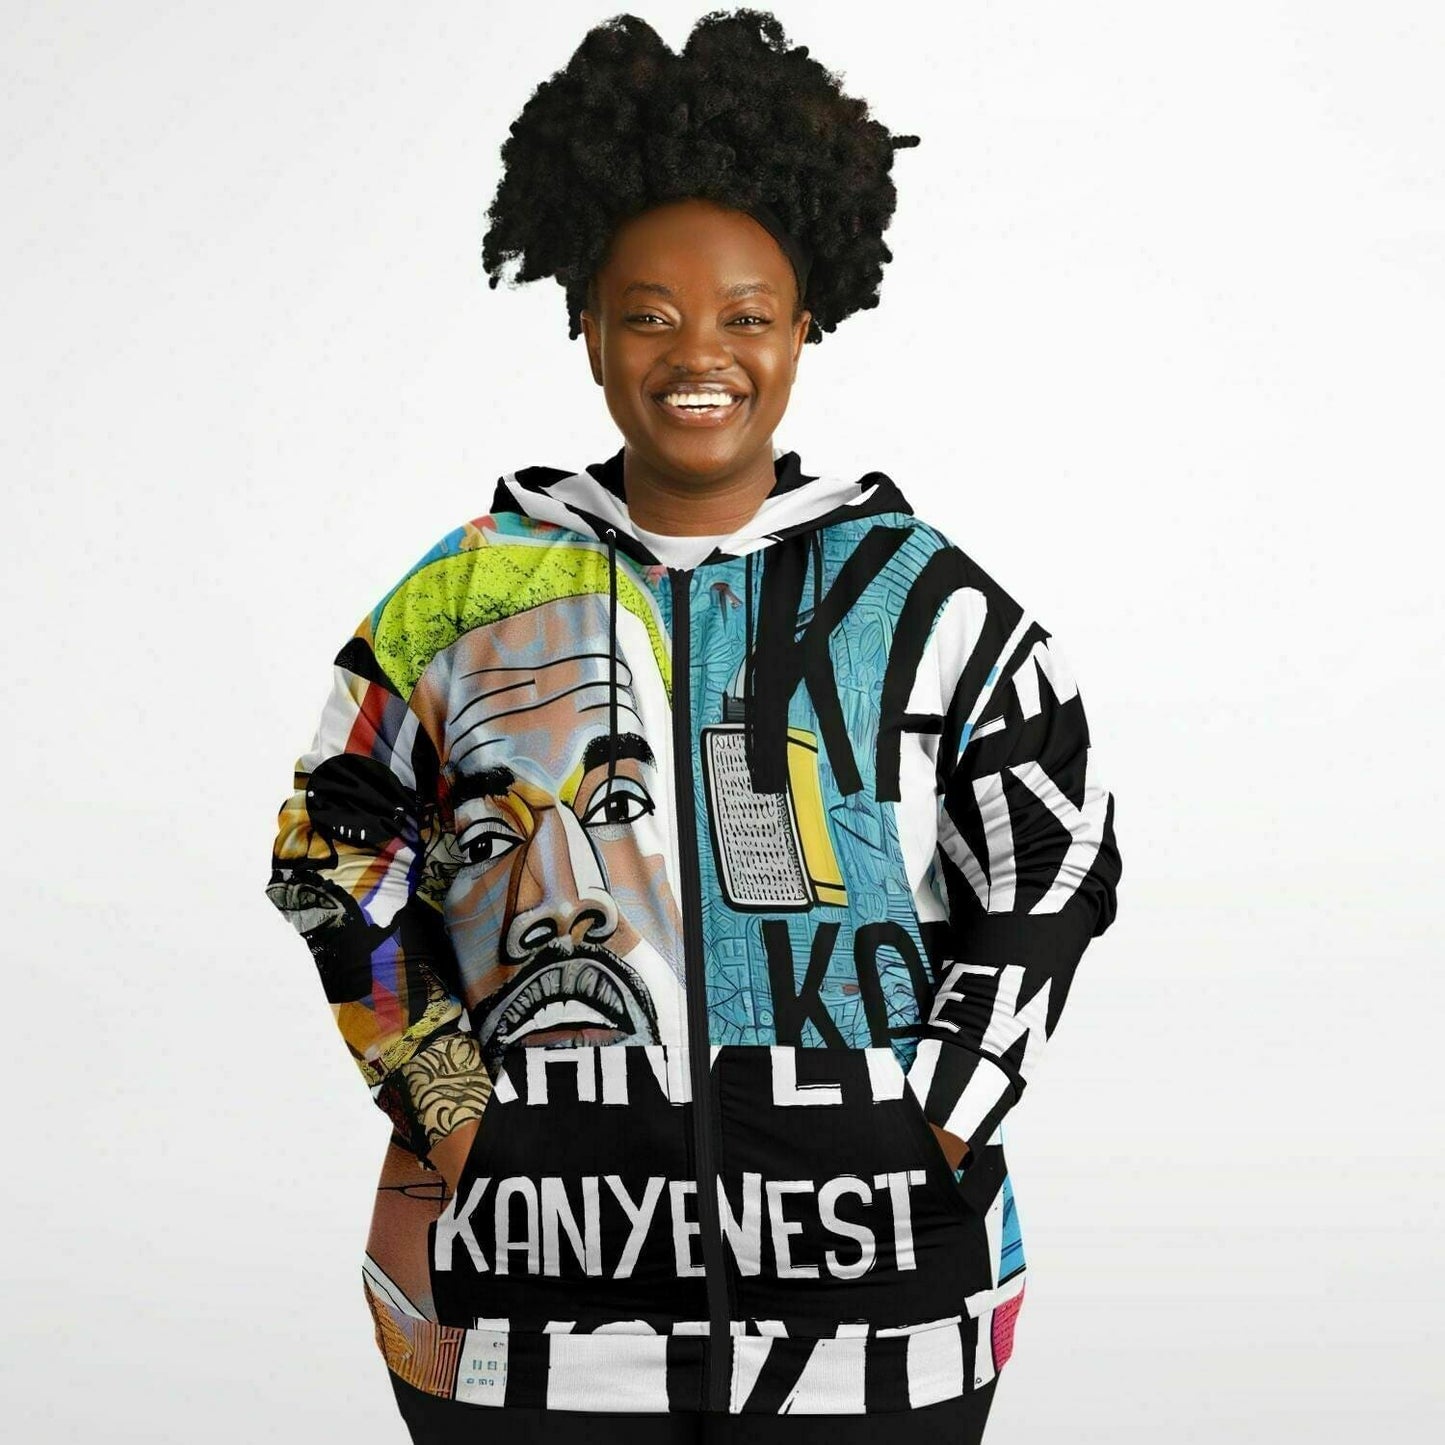 Kanye West Art Unisex Plus-Size Zip Up Hoodie HOO-DESIGN.SHOP